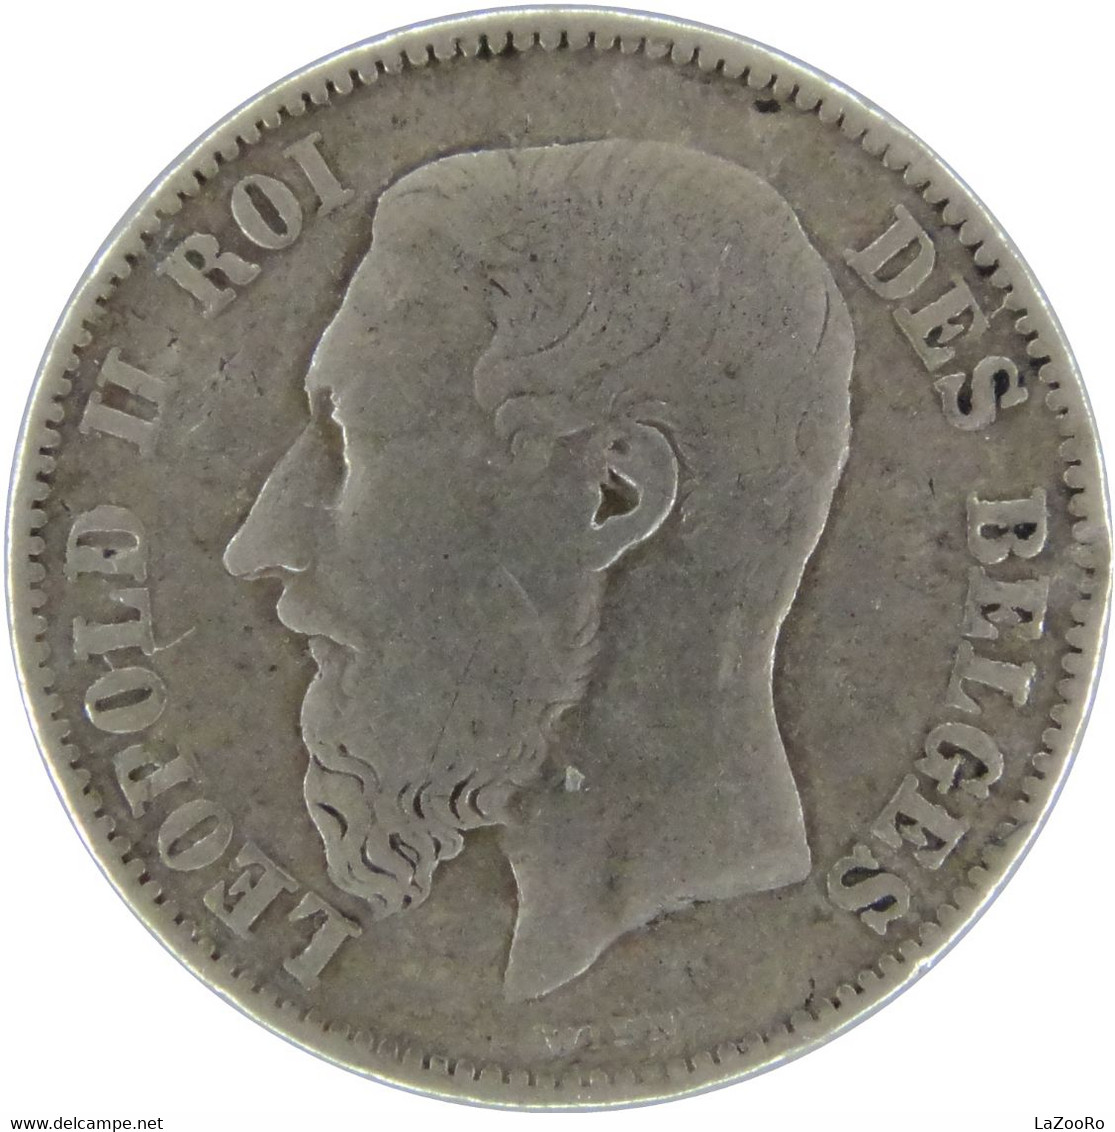 LaZooRo: Belgium 50 Centimes 1866 VF / XF - Silver - 50 Cents